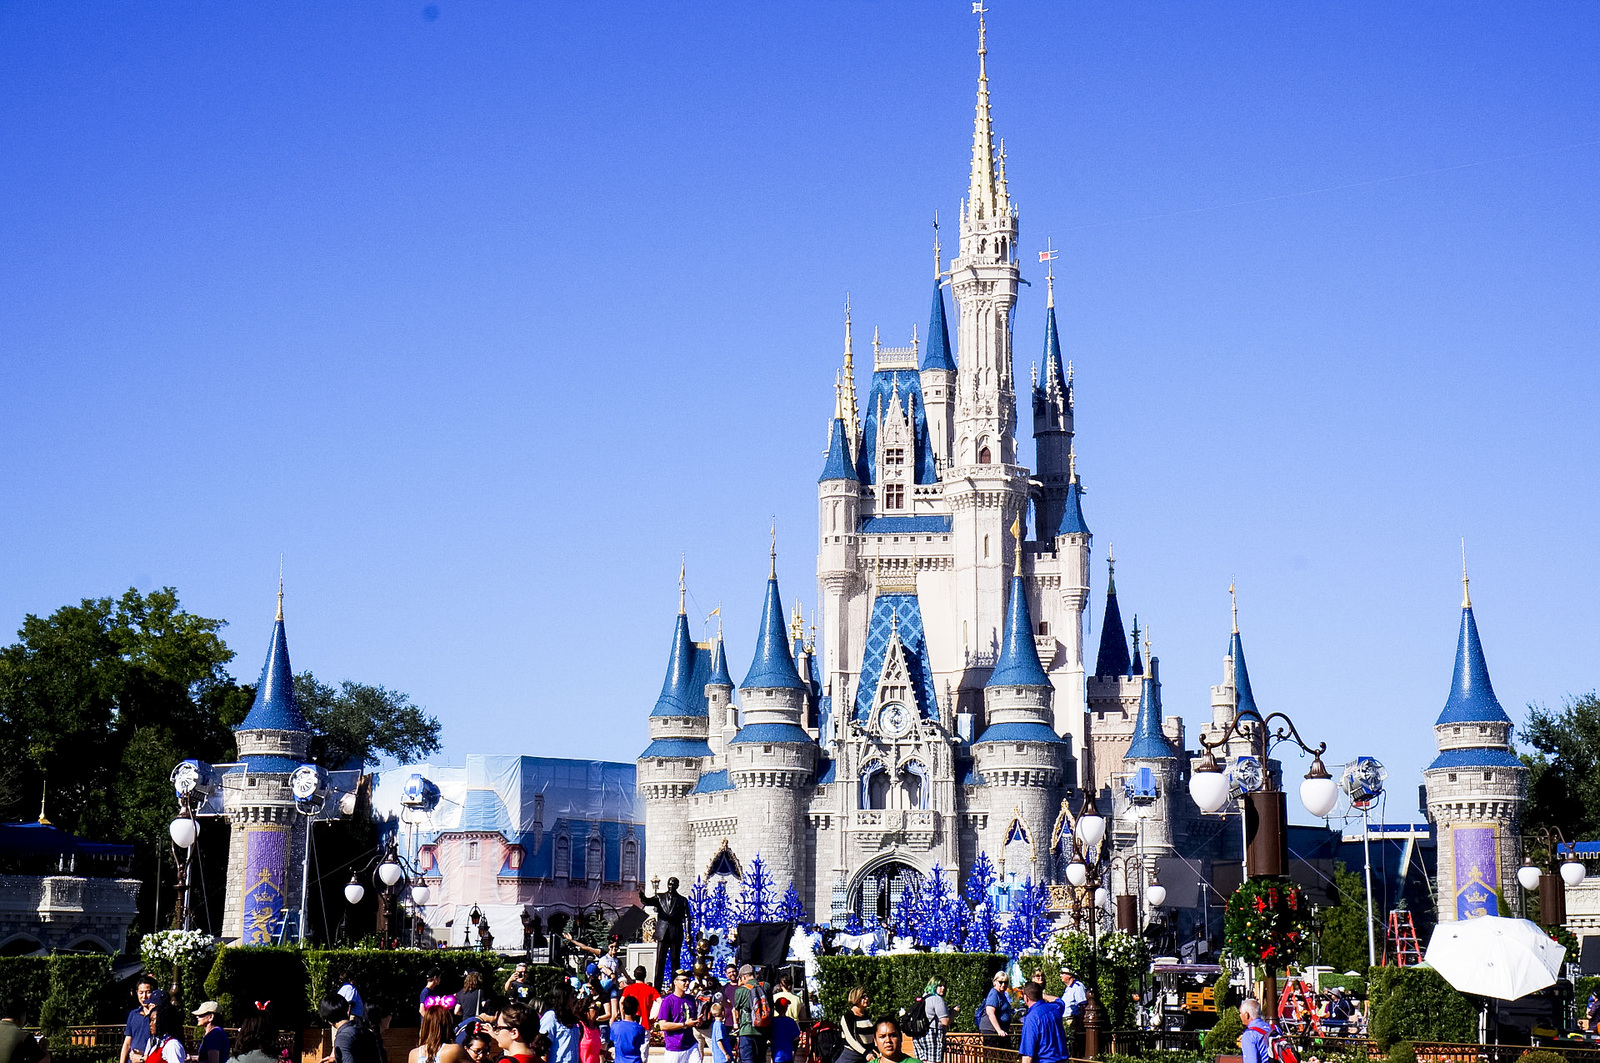 Dreams Unlimited Travel Disney Gift Card Offer - Walt Disney World